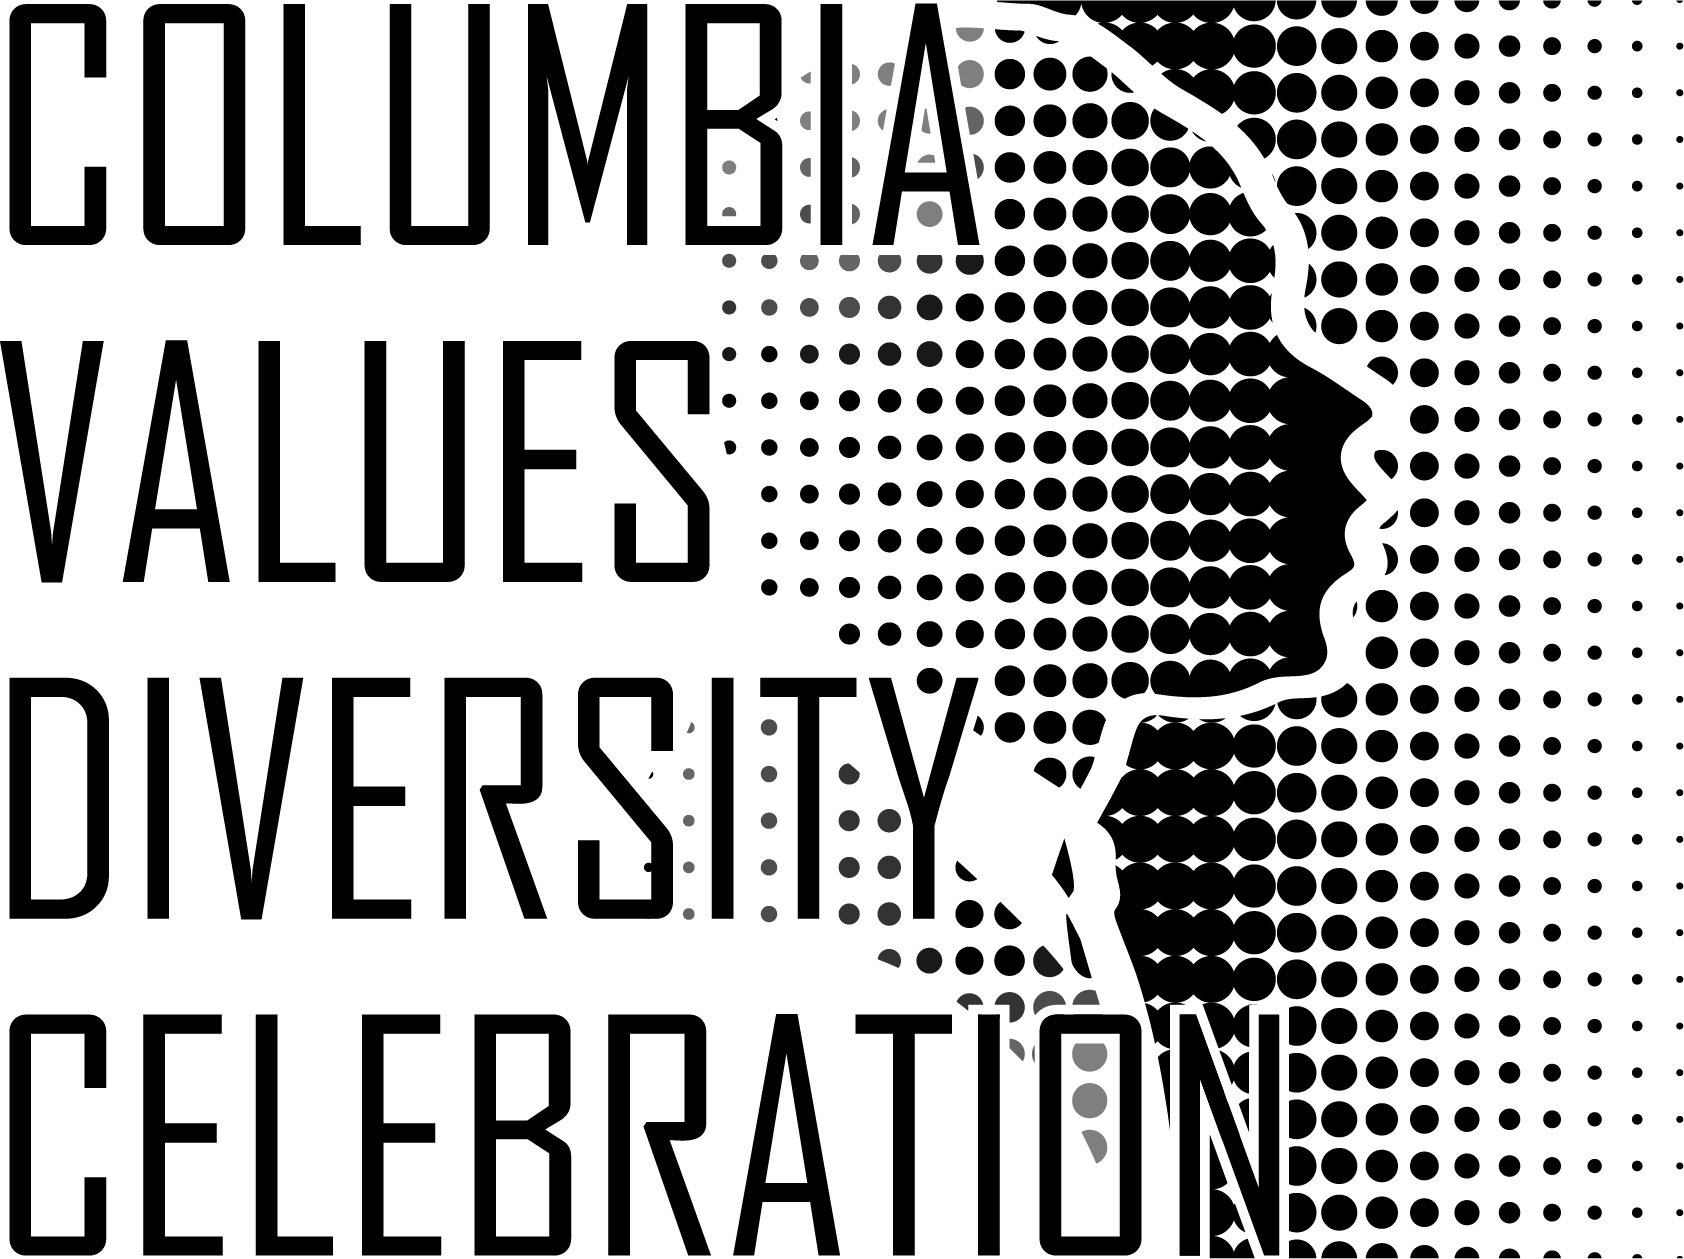 Columbia Values Diversity Celebration - Web Page - City of Columbia Missouri